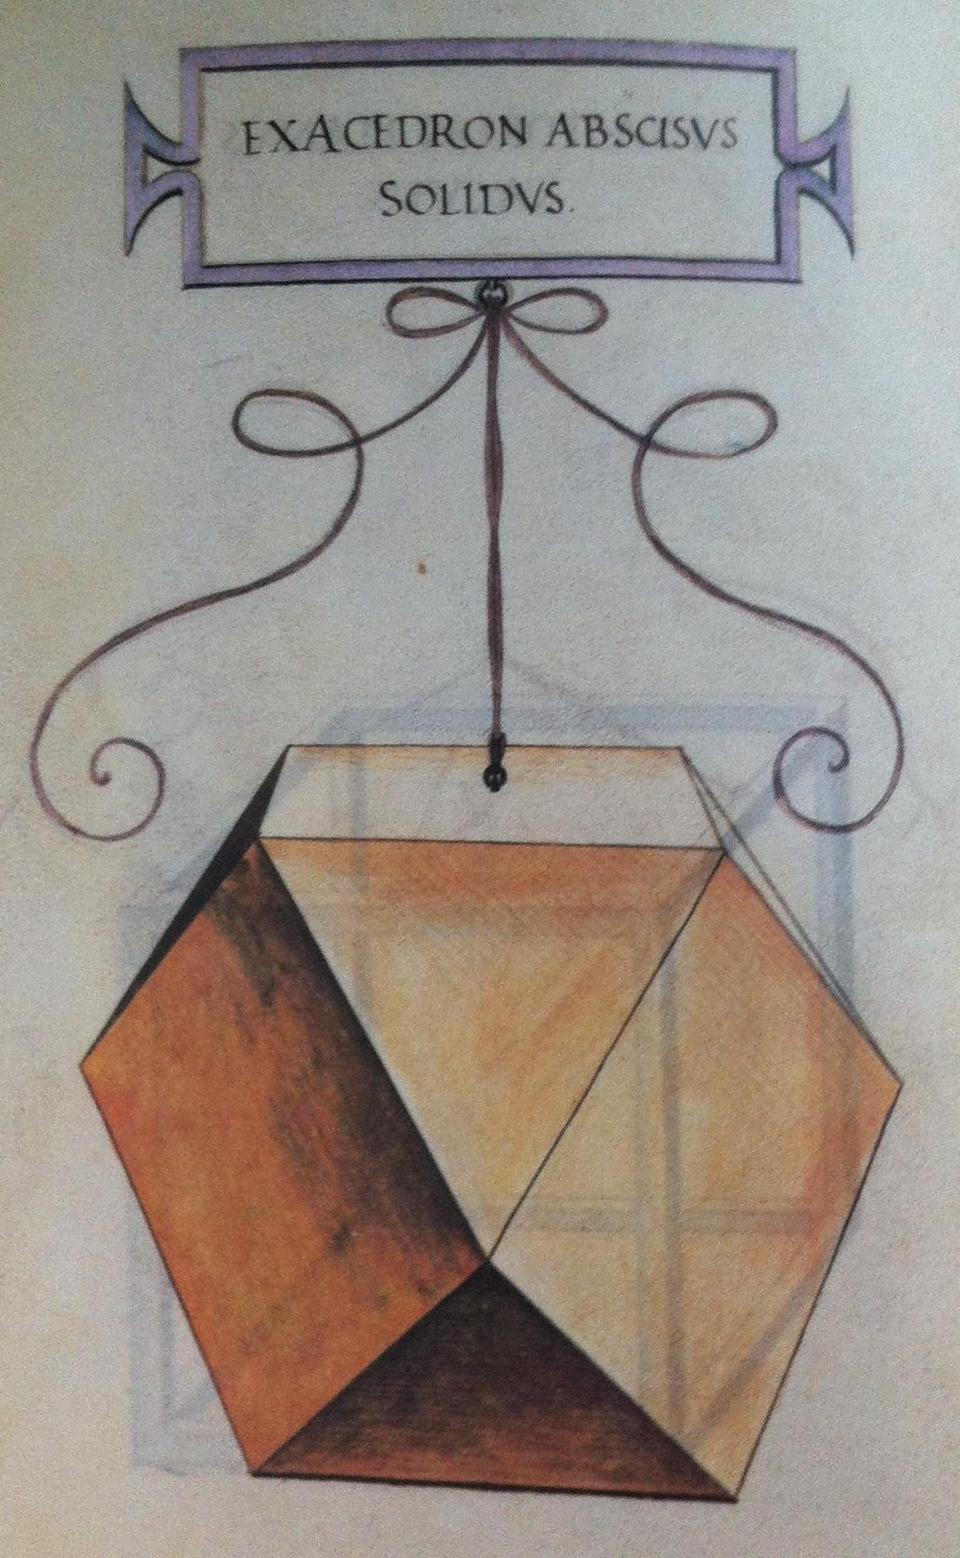 A drawing of a cuboctahedron by Leonardo da Vinci